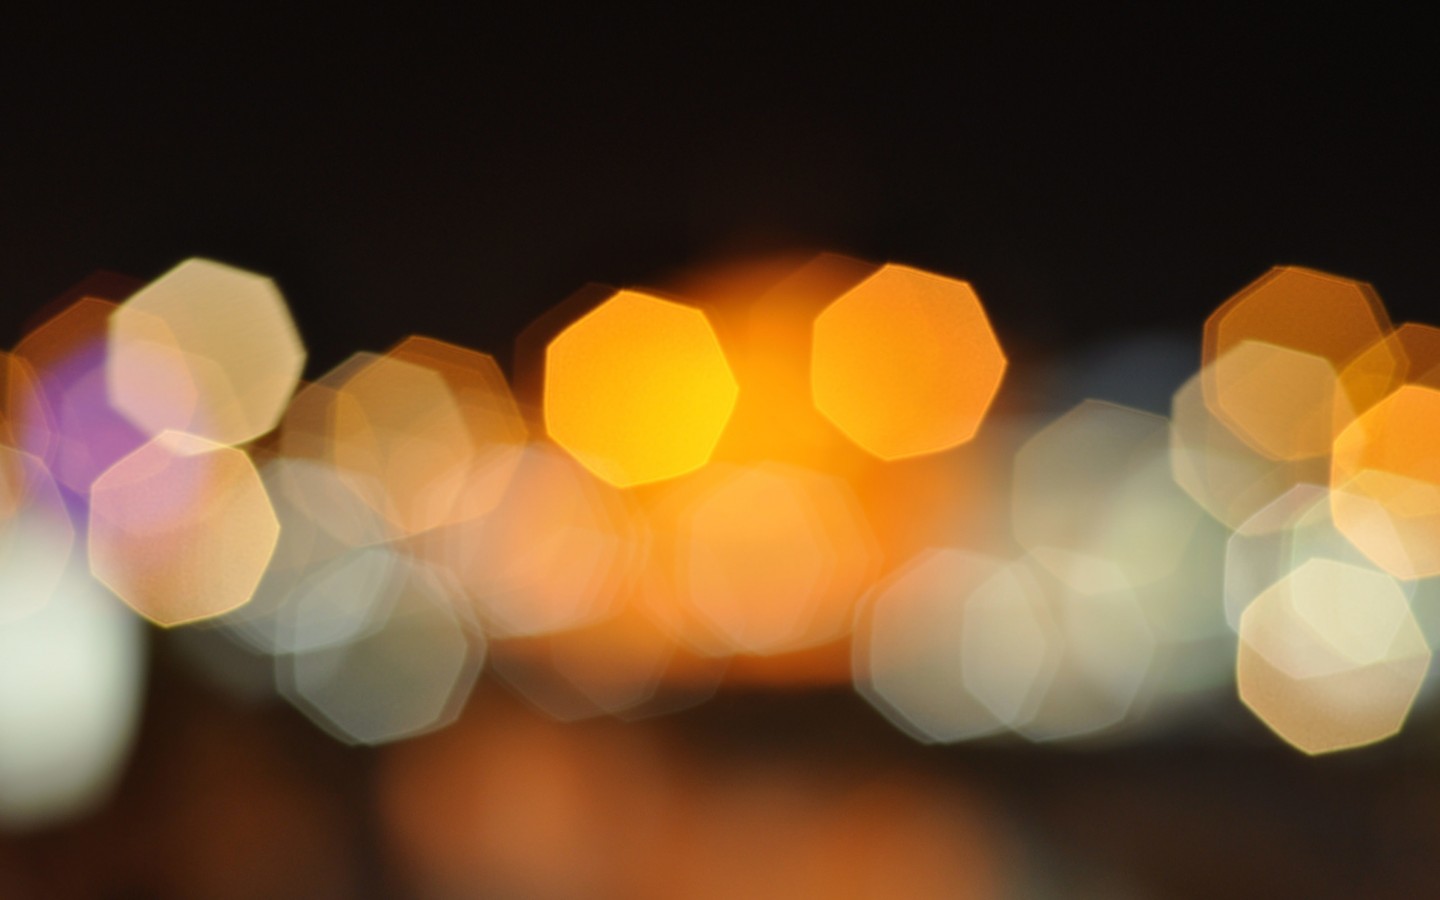 Blurred City Lights Wallpaper for Desktop 1440x900